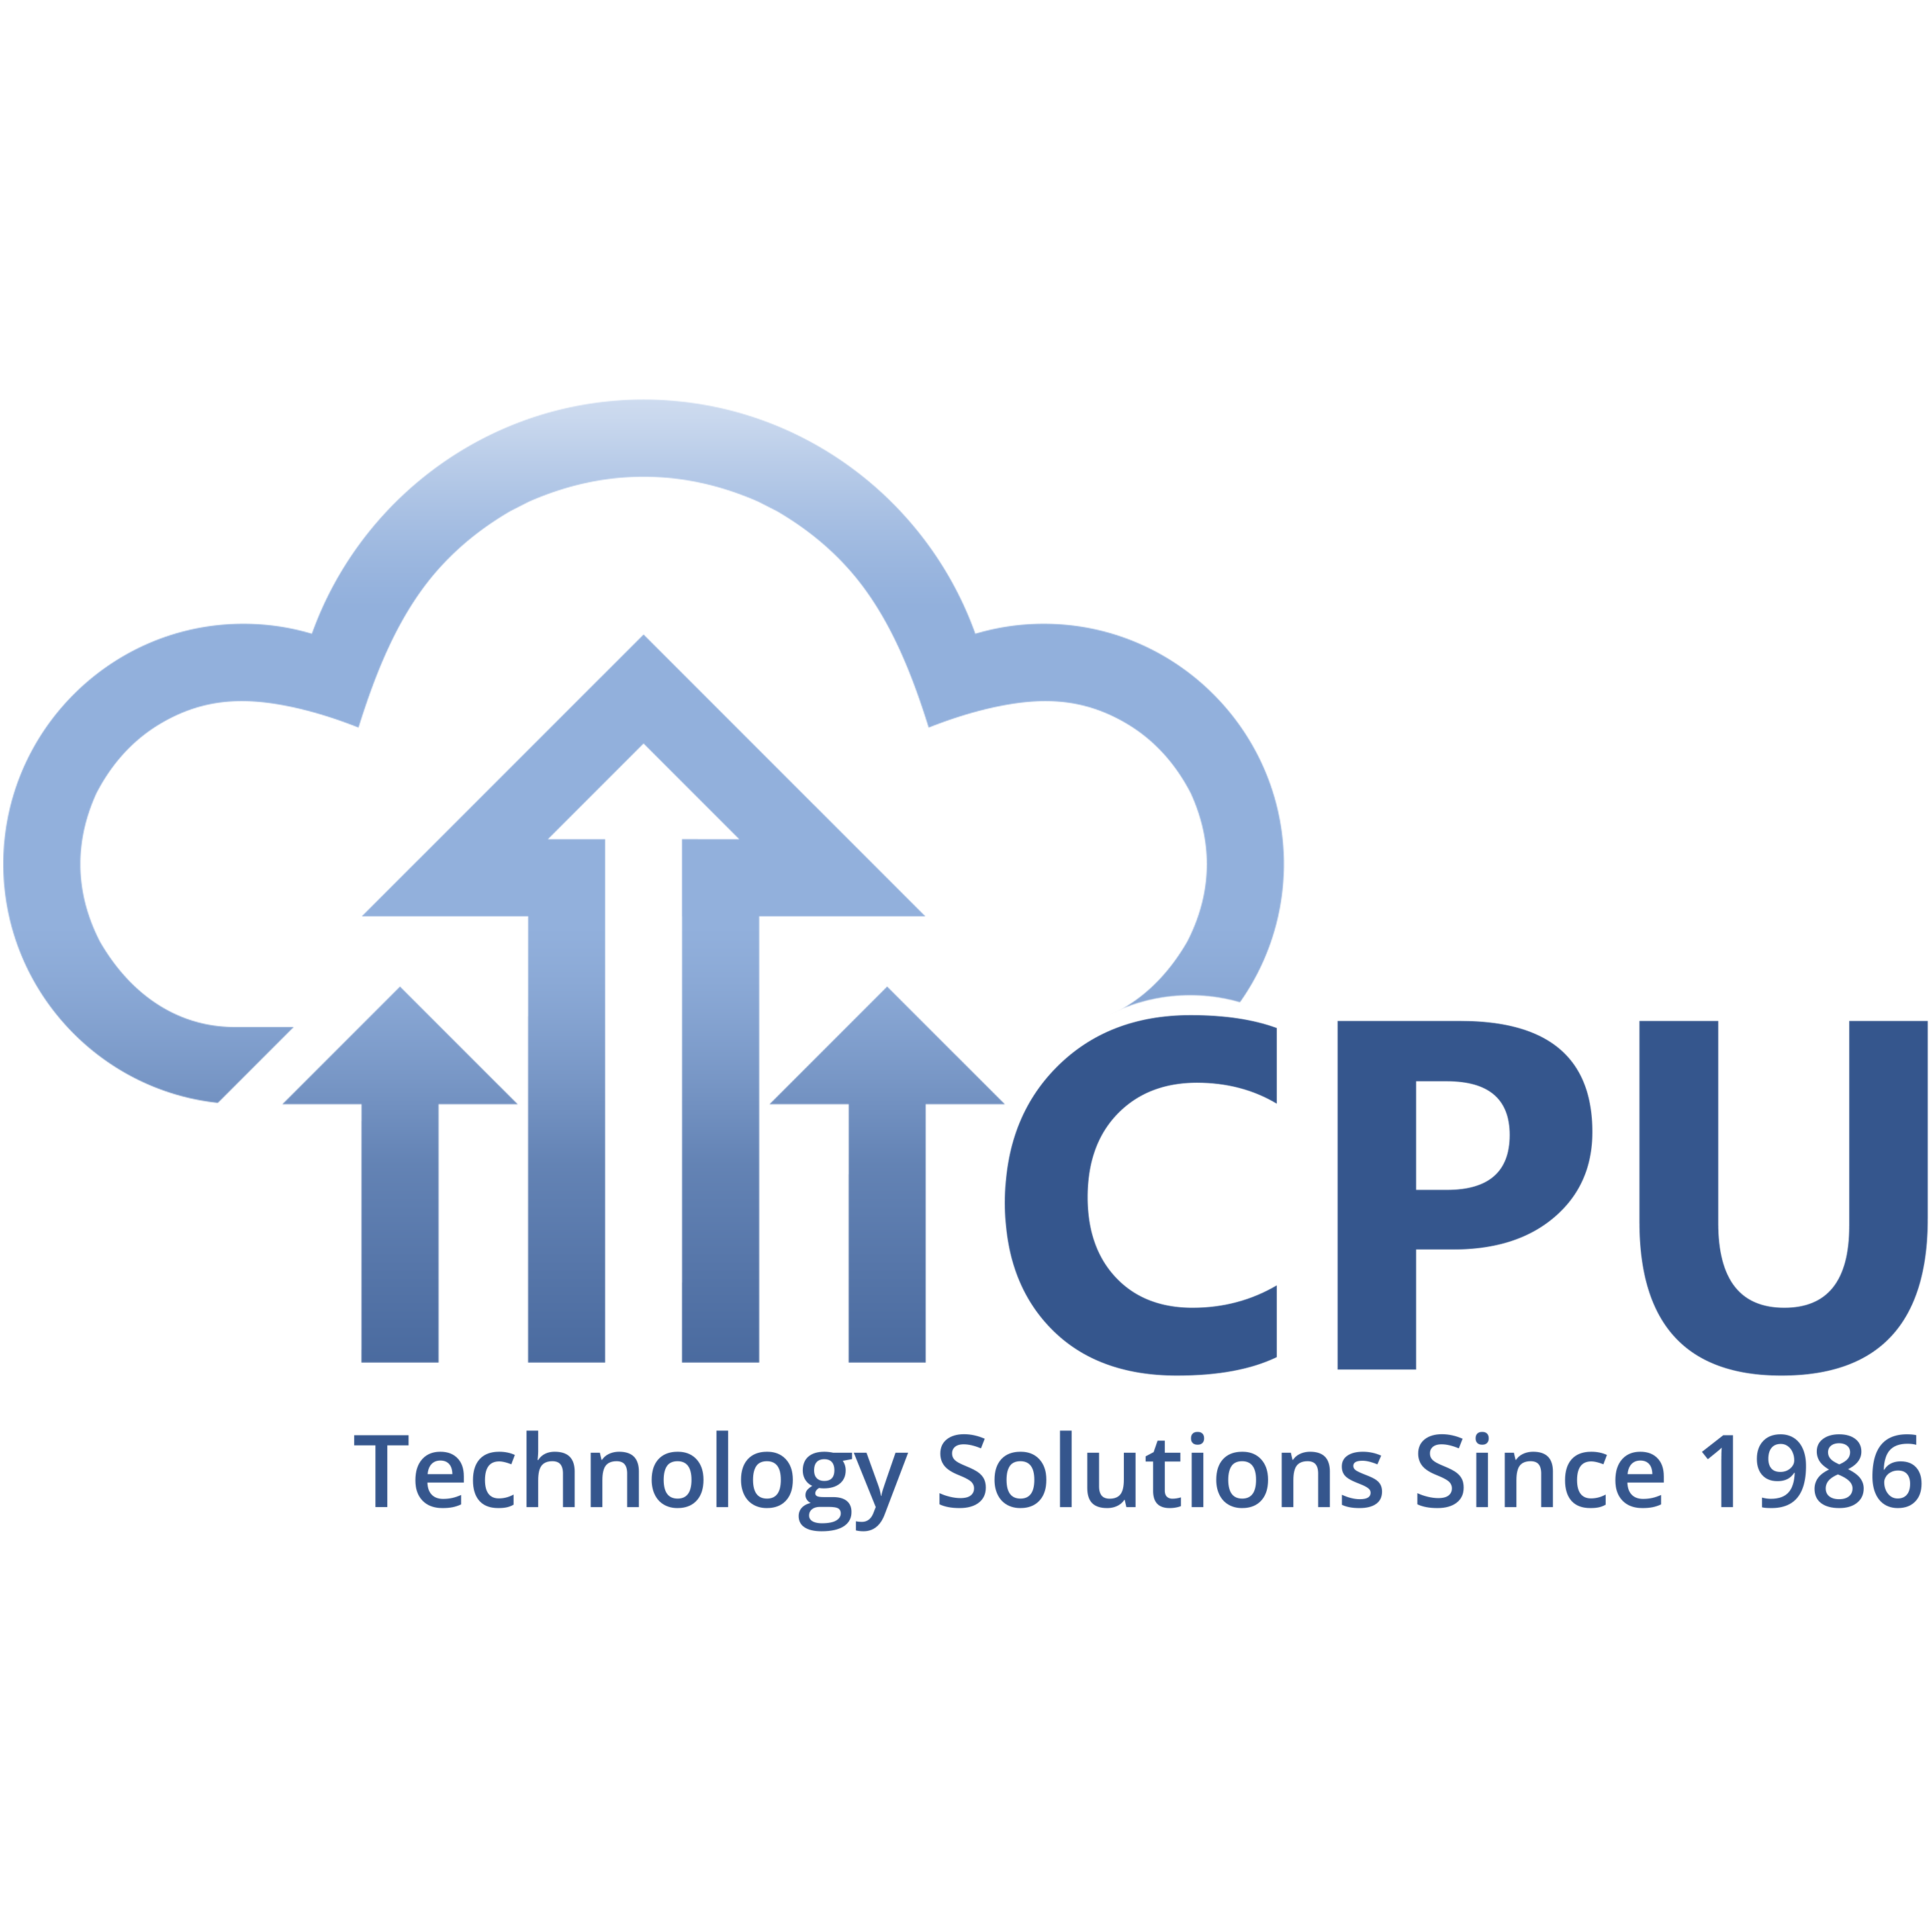 CPU, Inc Logo